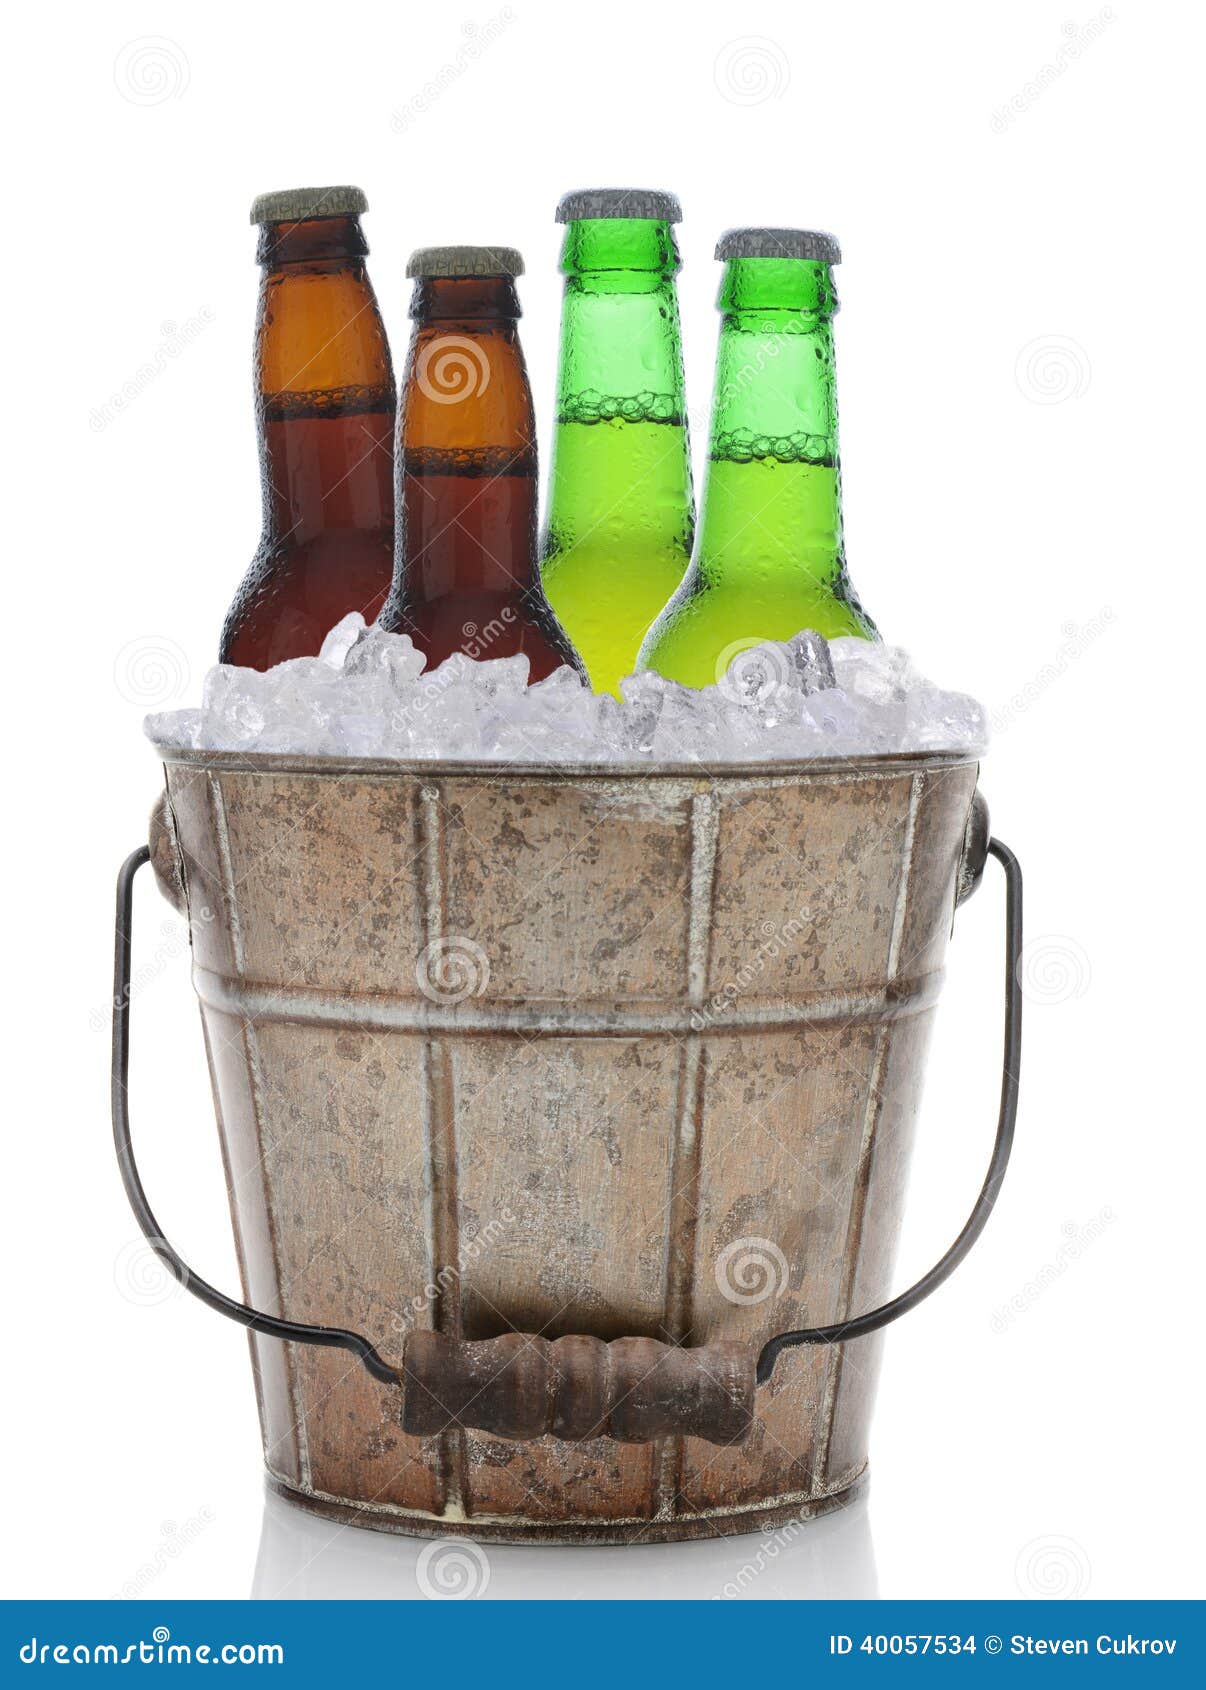 free bucket of beer clipart - photo #49